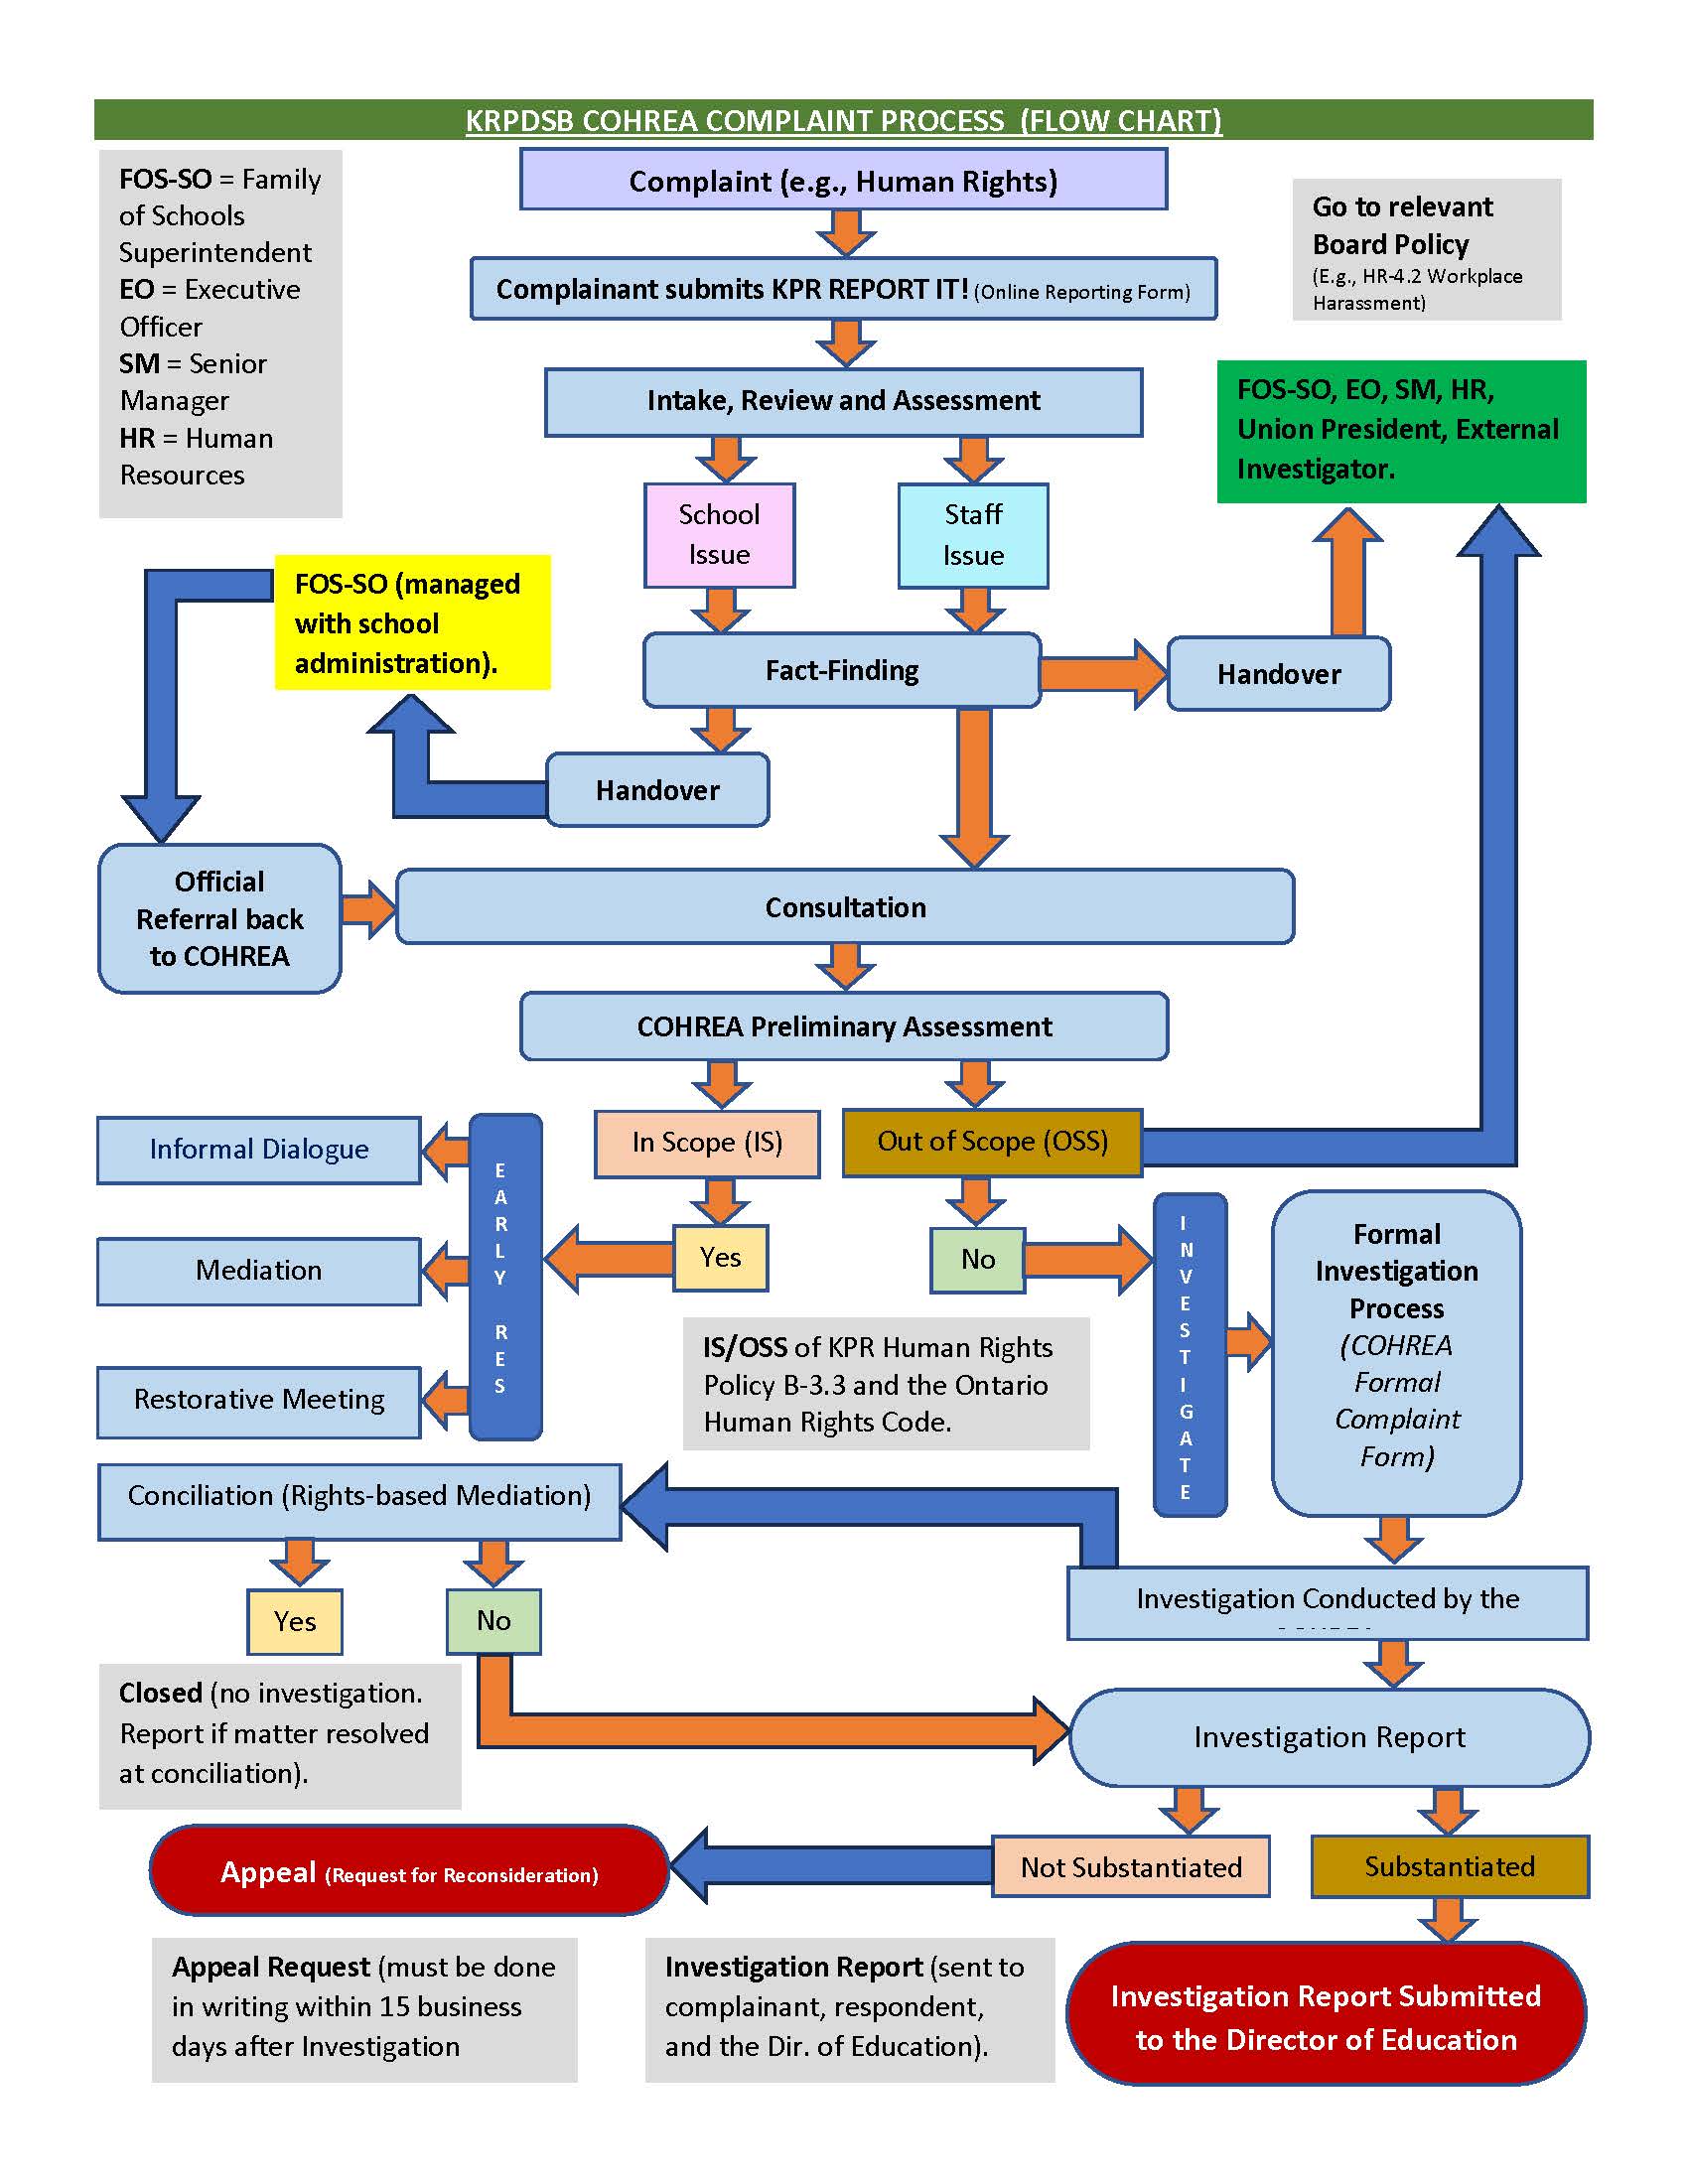 KPR Human Rights Complaint Process Flow Chart Diagram 